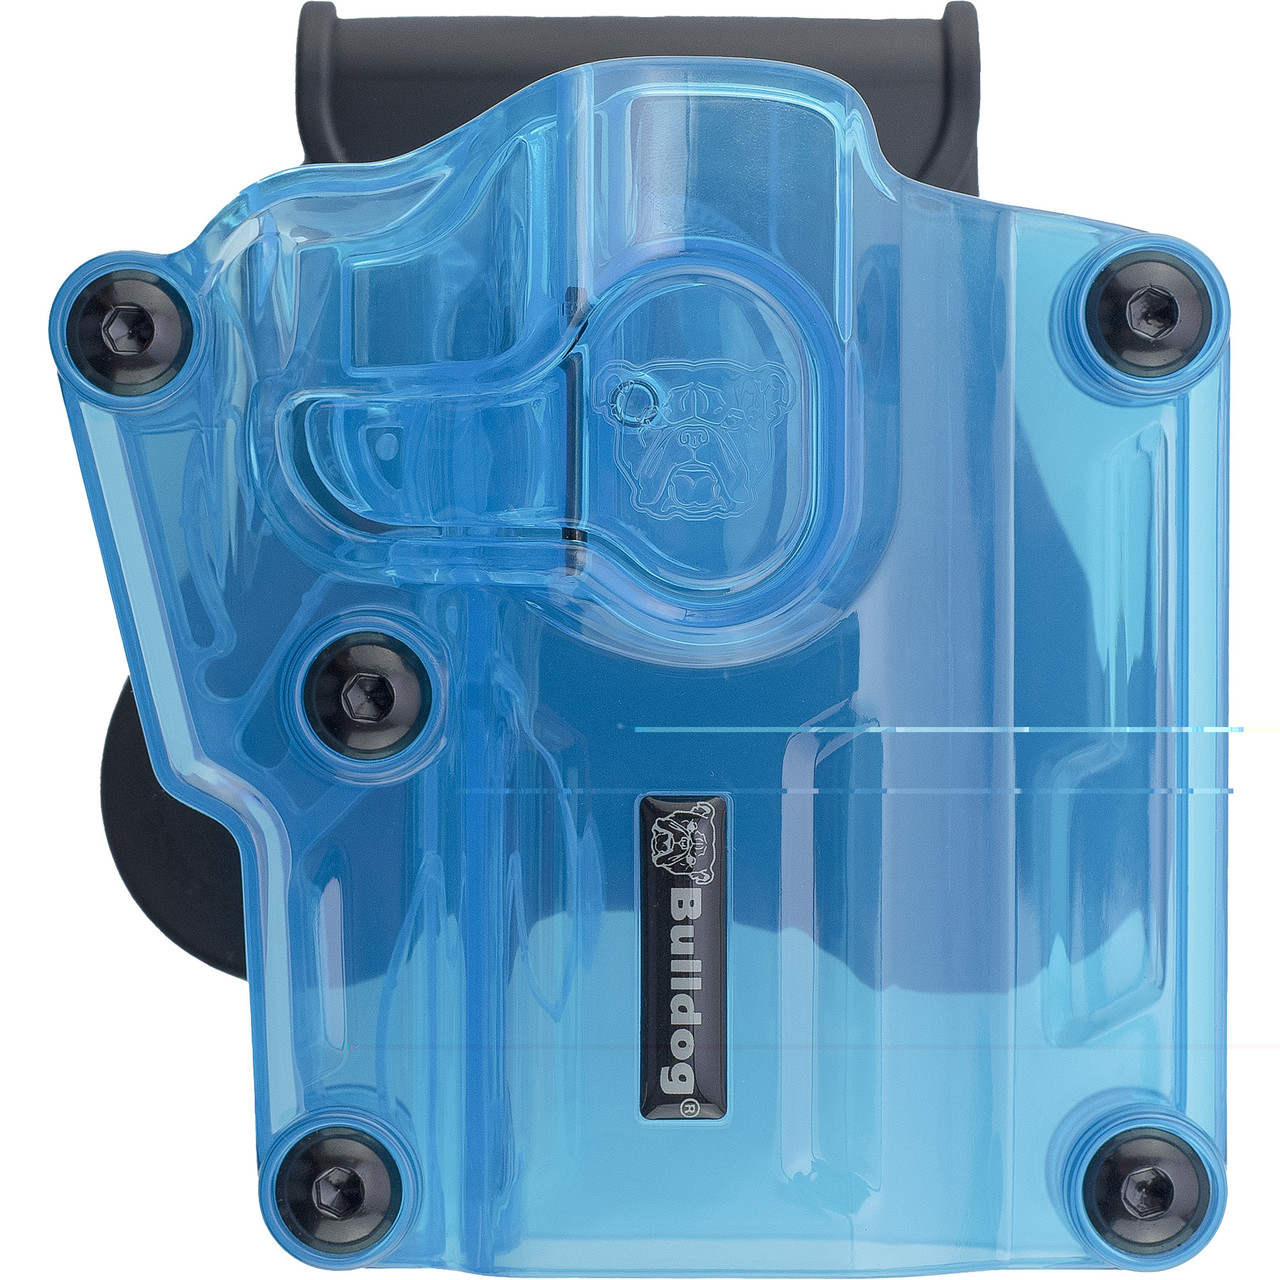 Bulldog Cases MX-005 Max Multi-fit Holster Blue